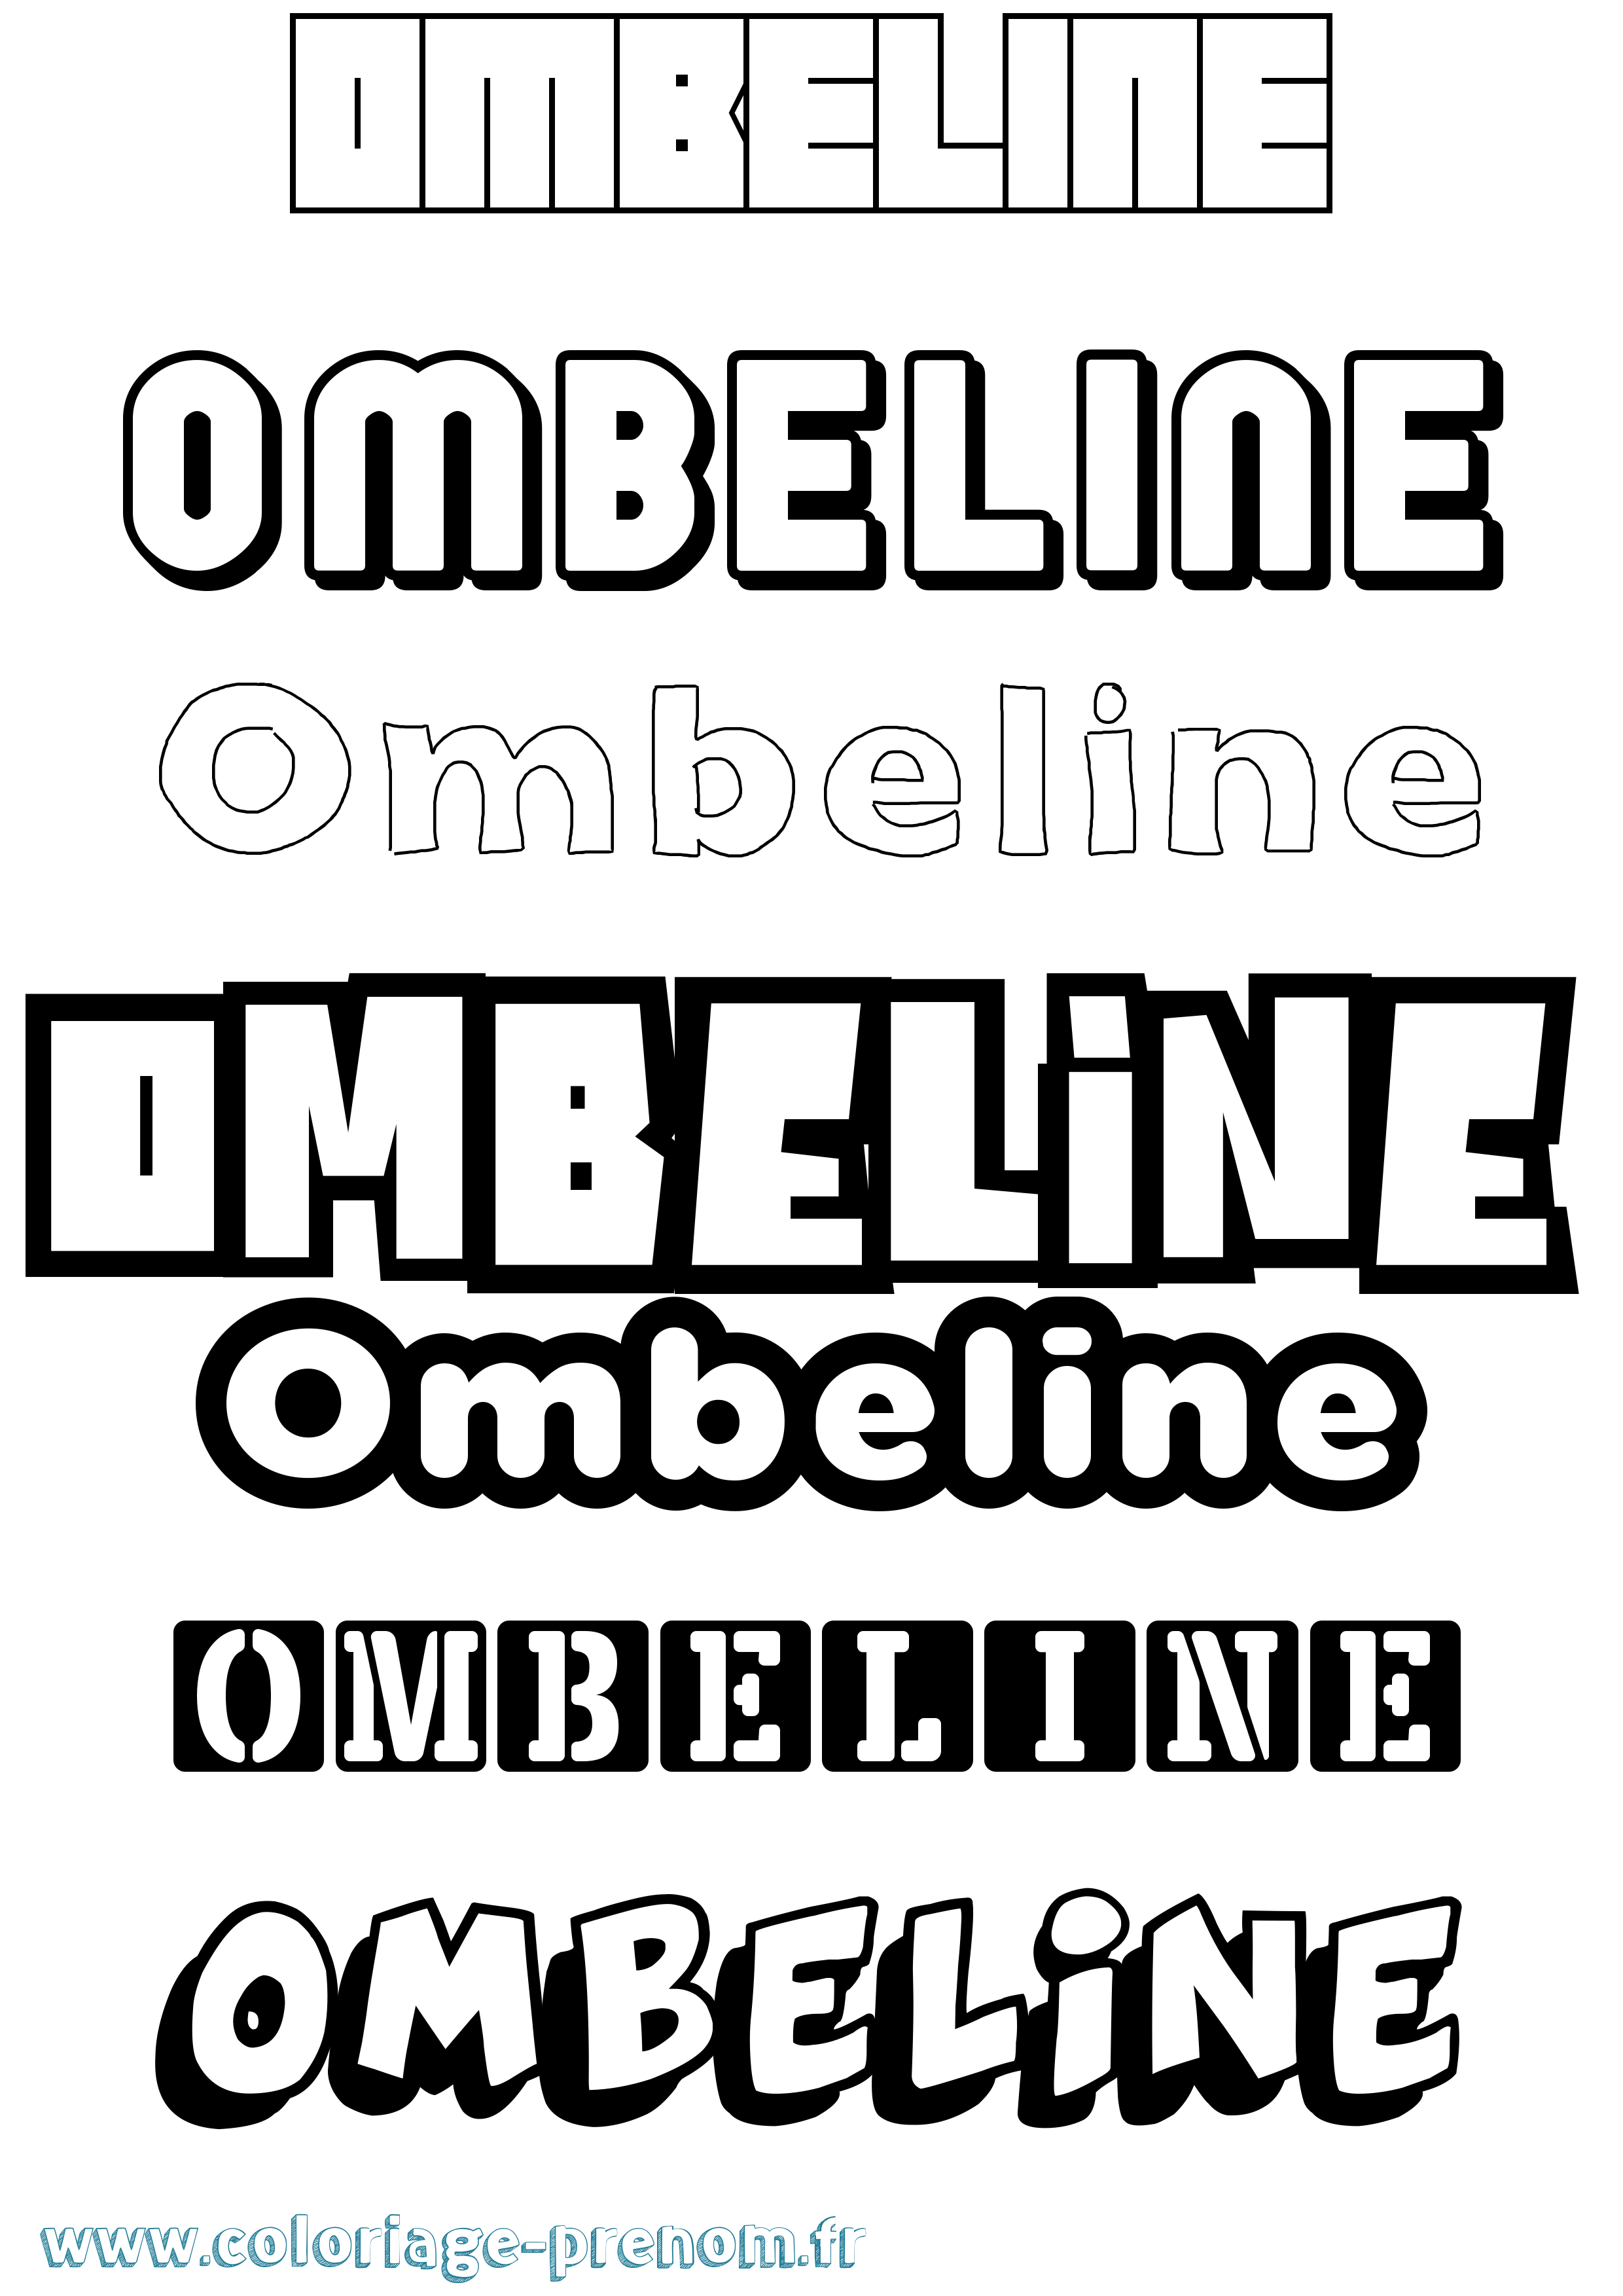 Coloriage prénom Ombeline